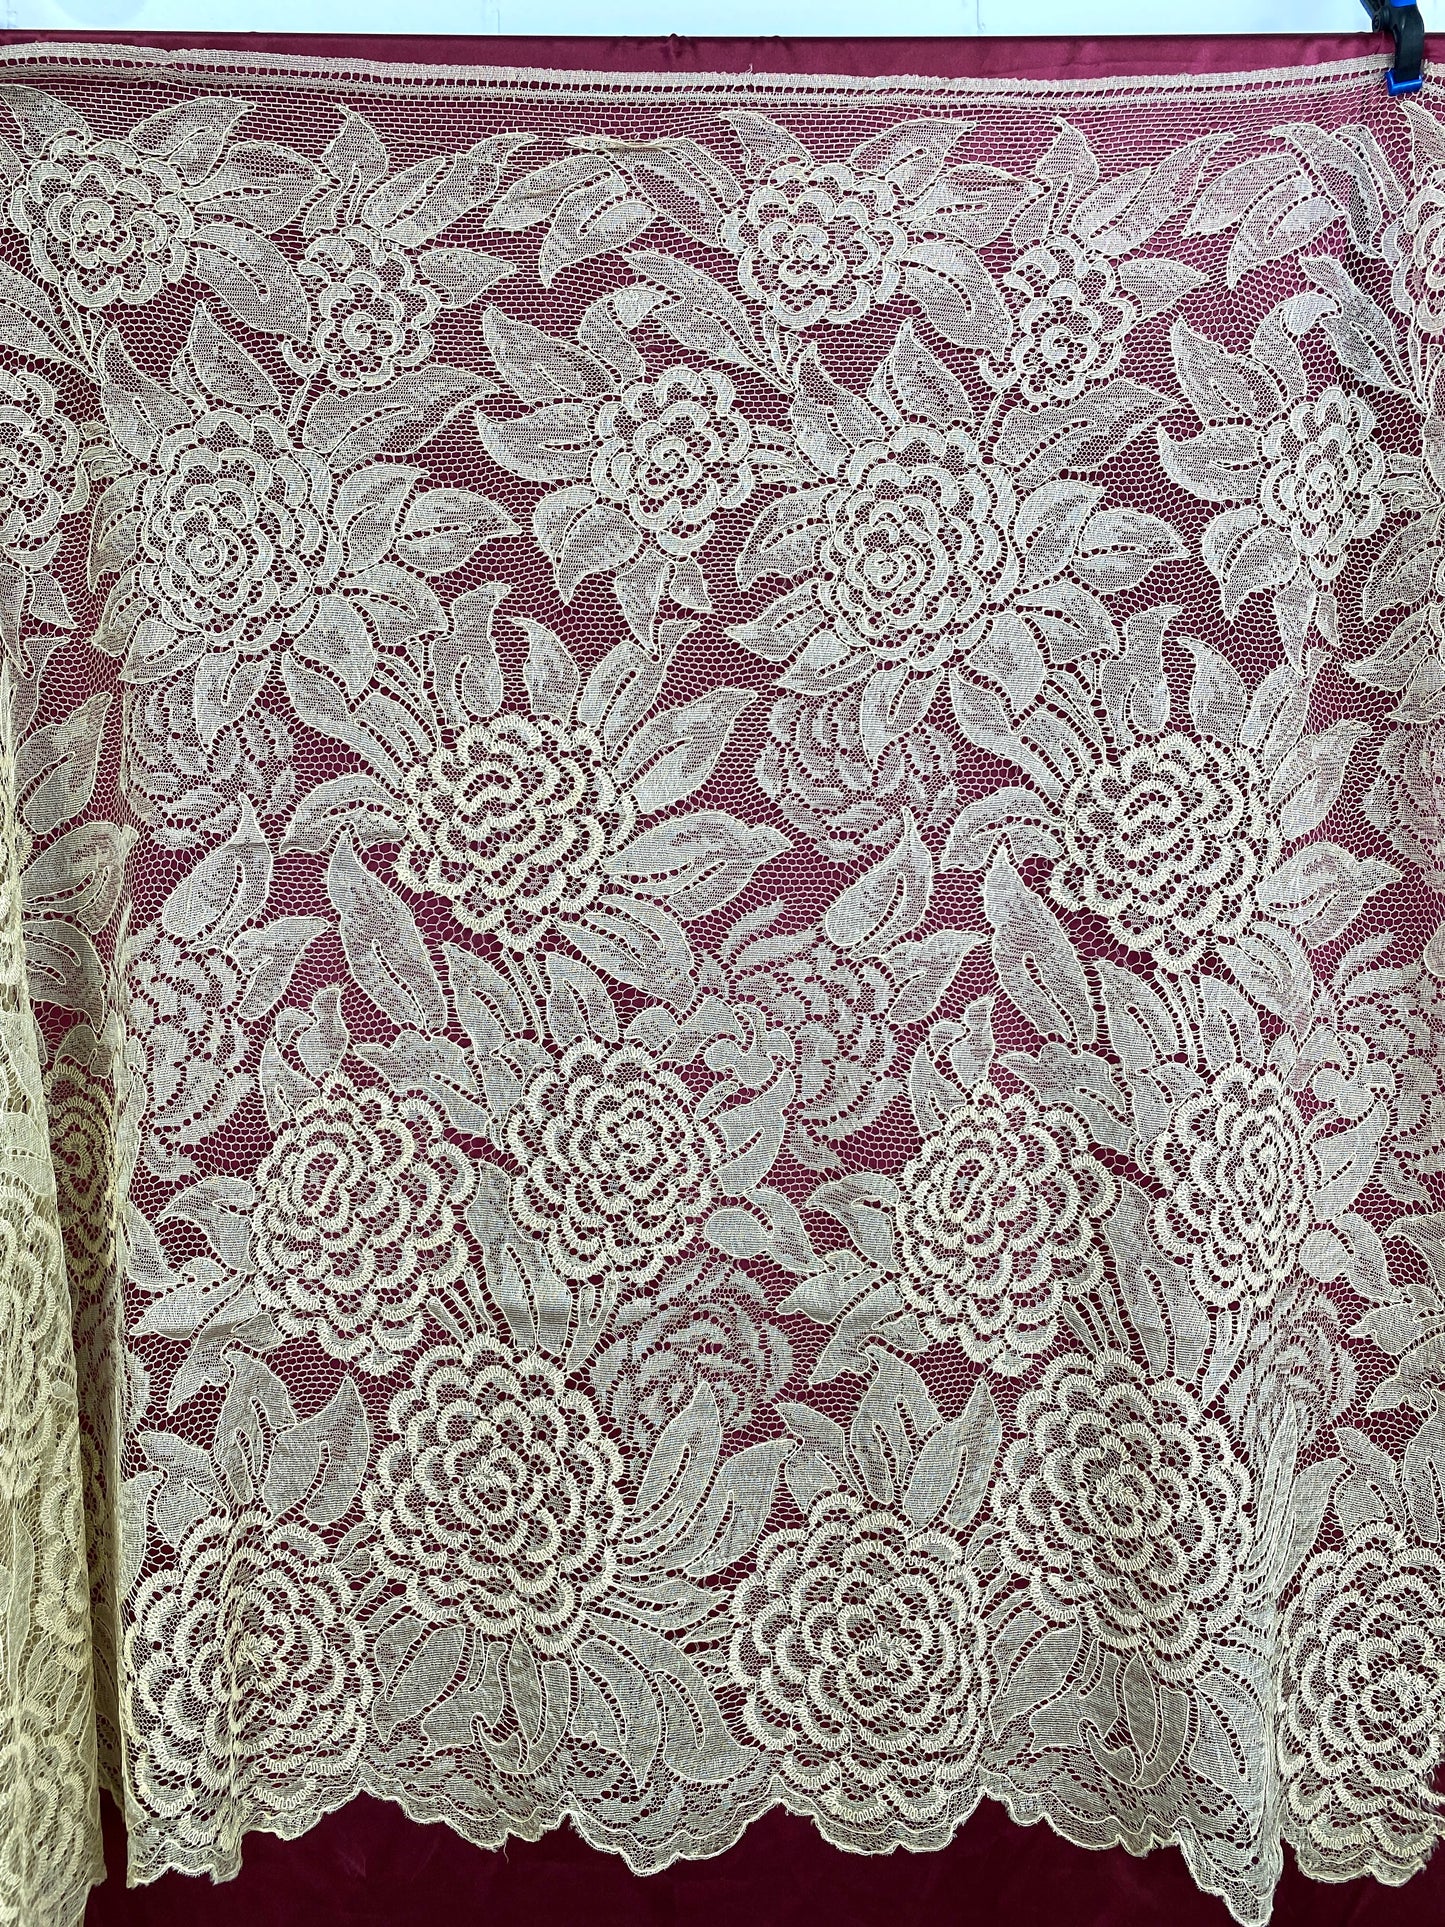 Vintage Beige Alencon Lace Fabric, 7 yards